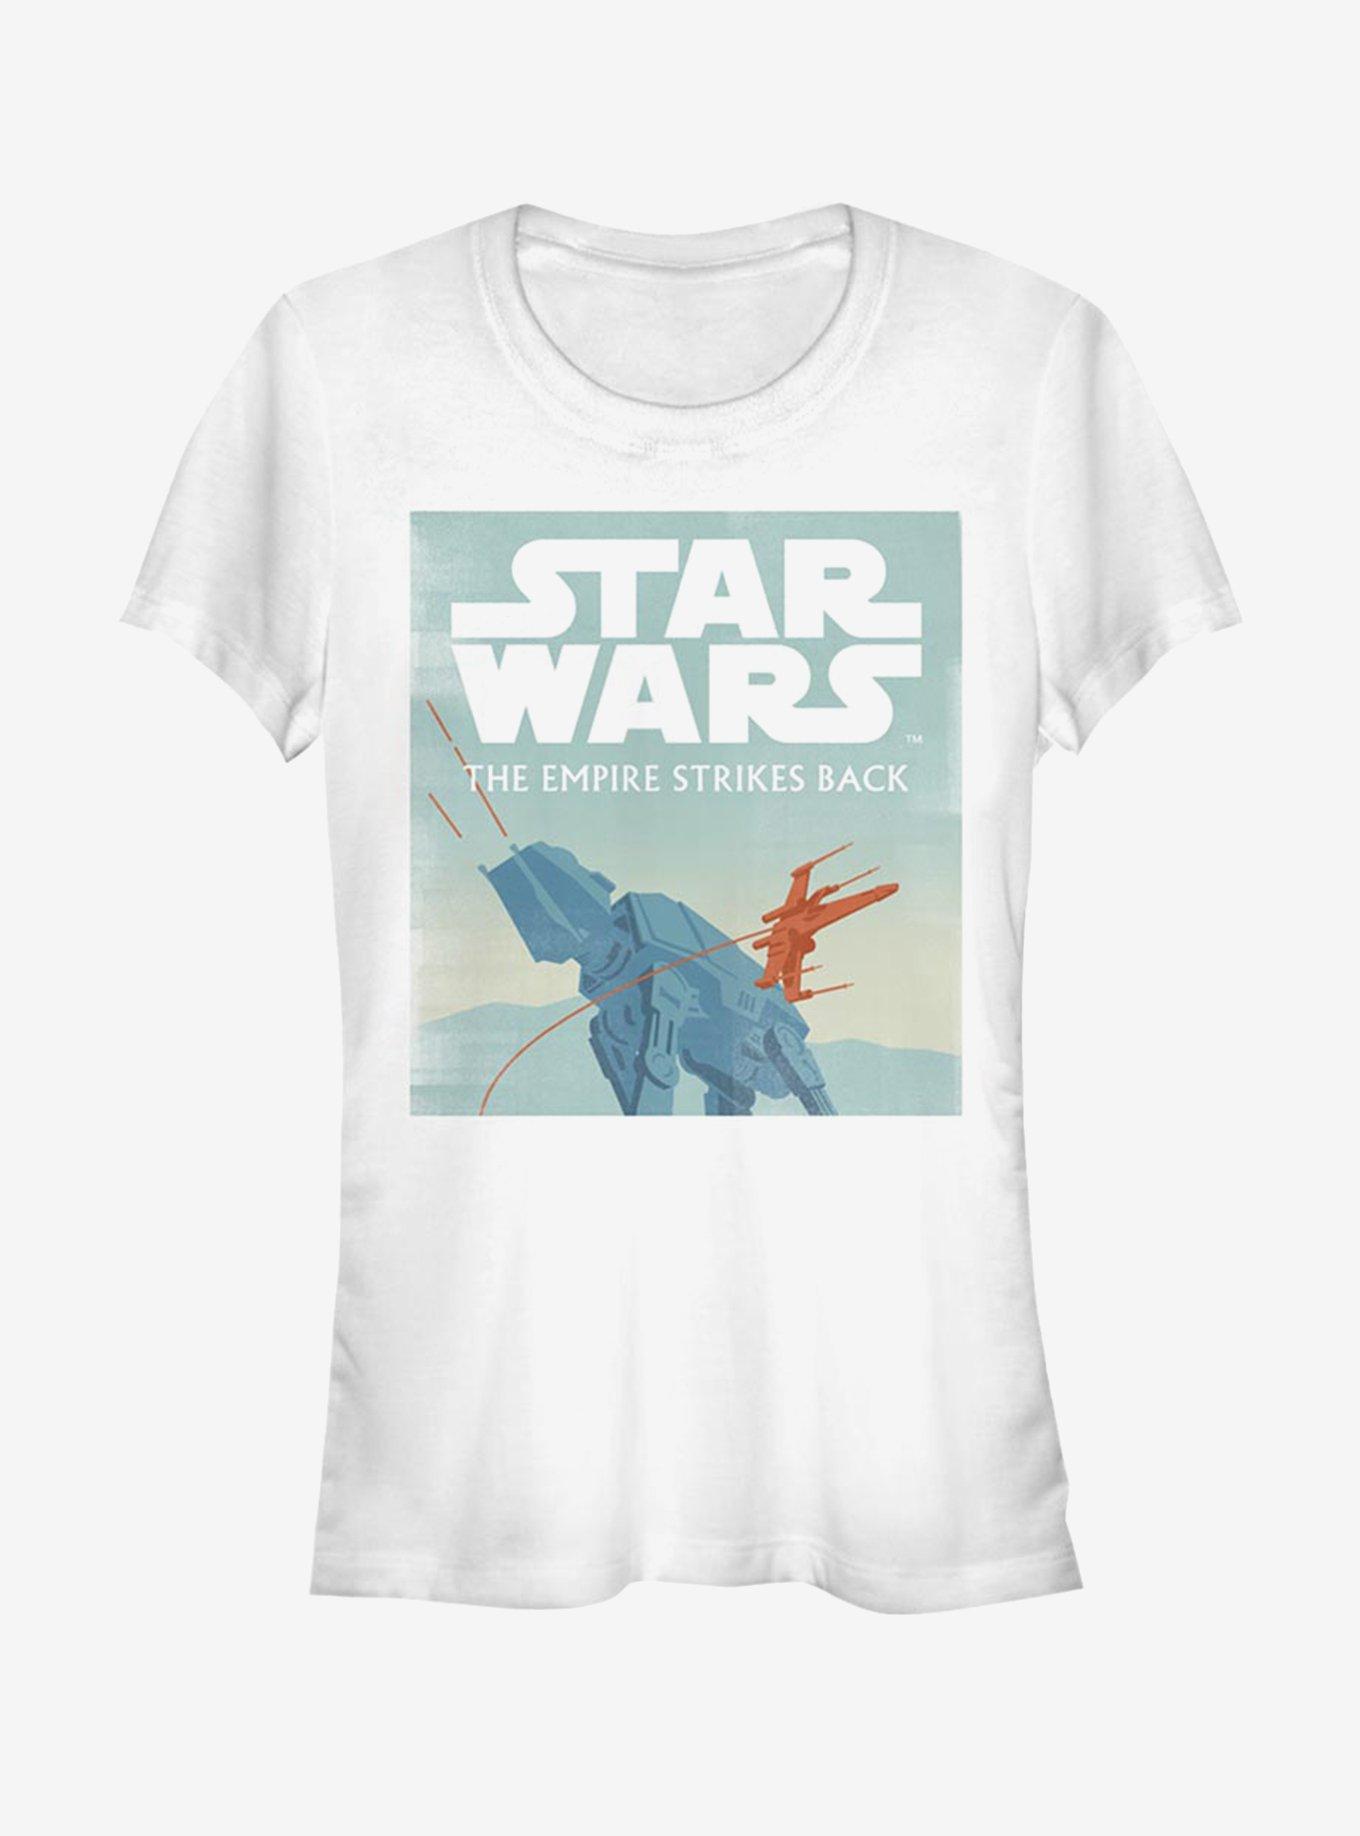 Star Wars Episode V The Empire Strikes Back AT-AT Attack Minimalist Poster Girls T-Shirt